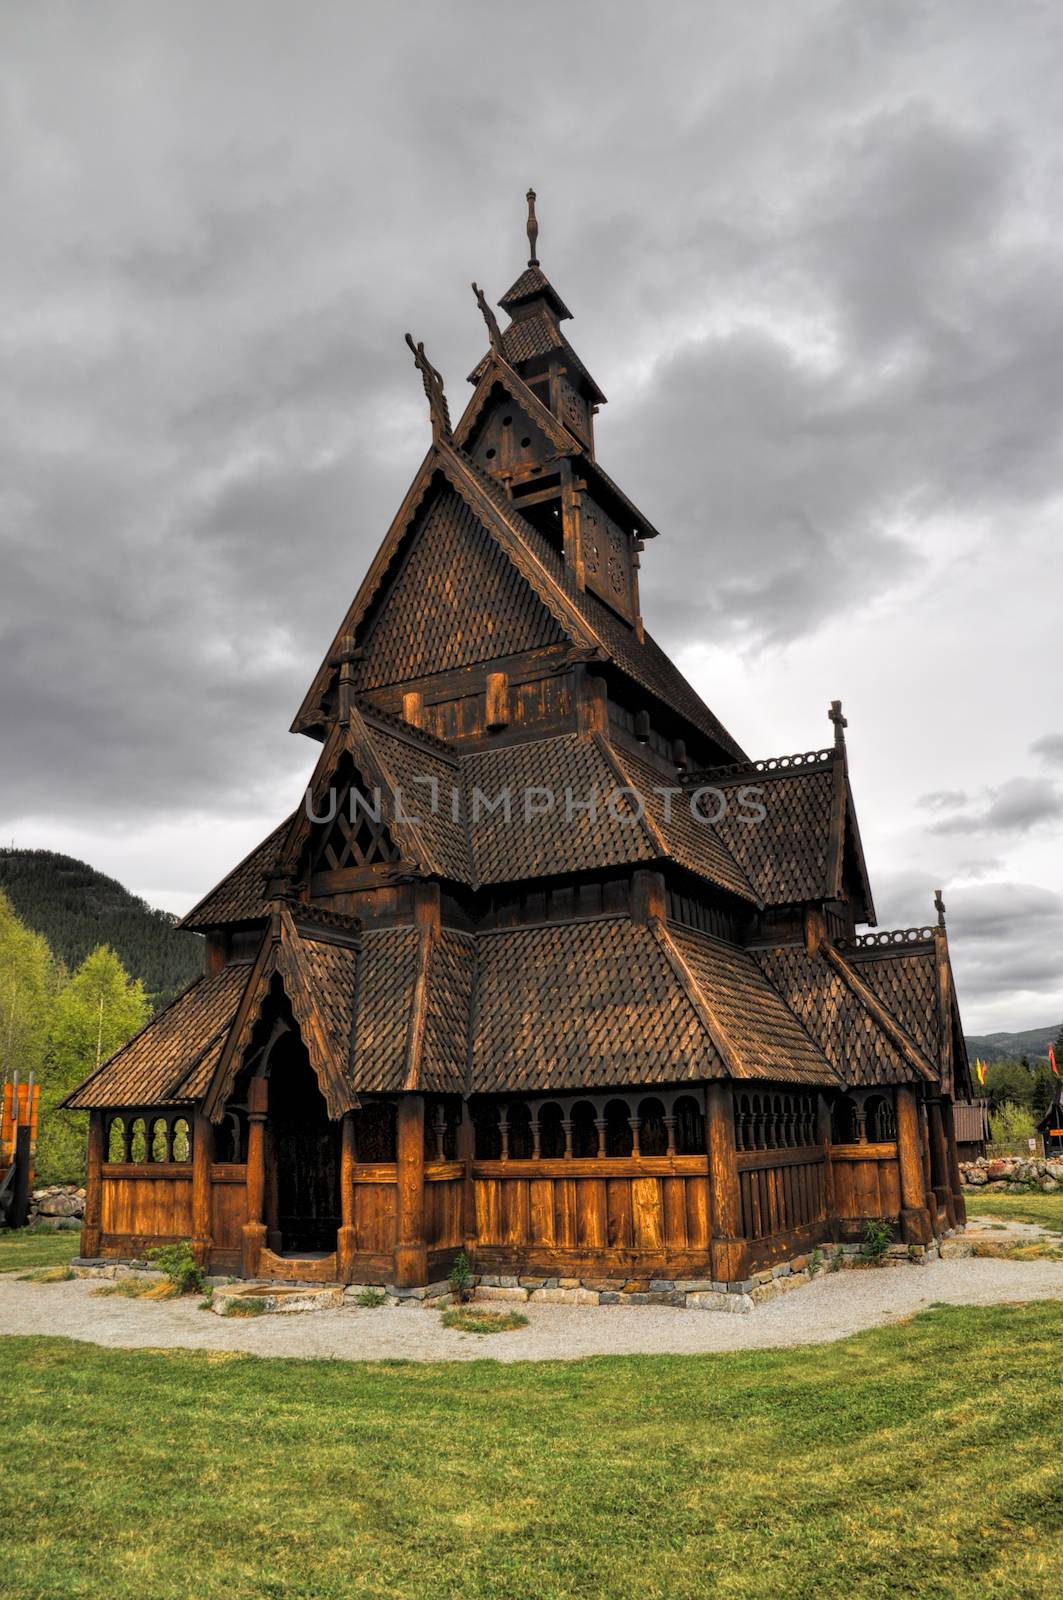 Gol, wooden church in Norway by MichalKnitl